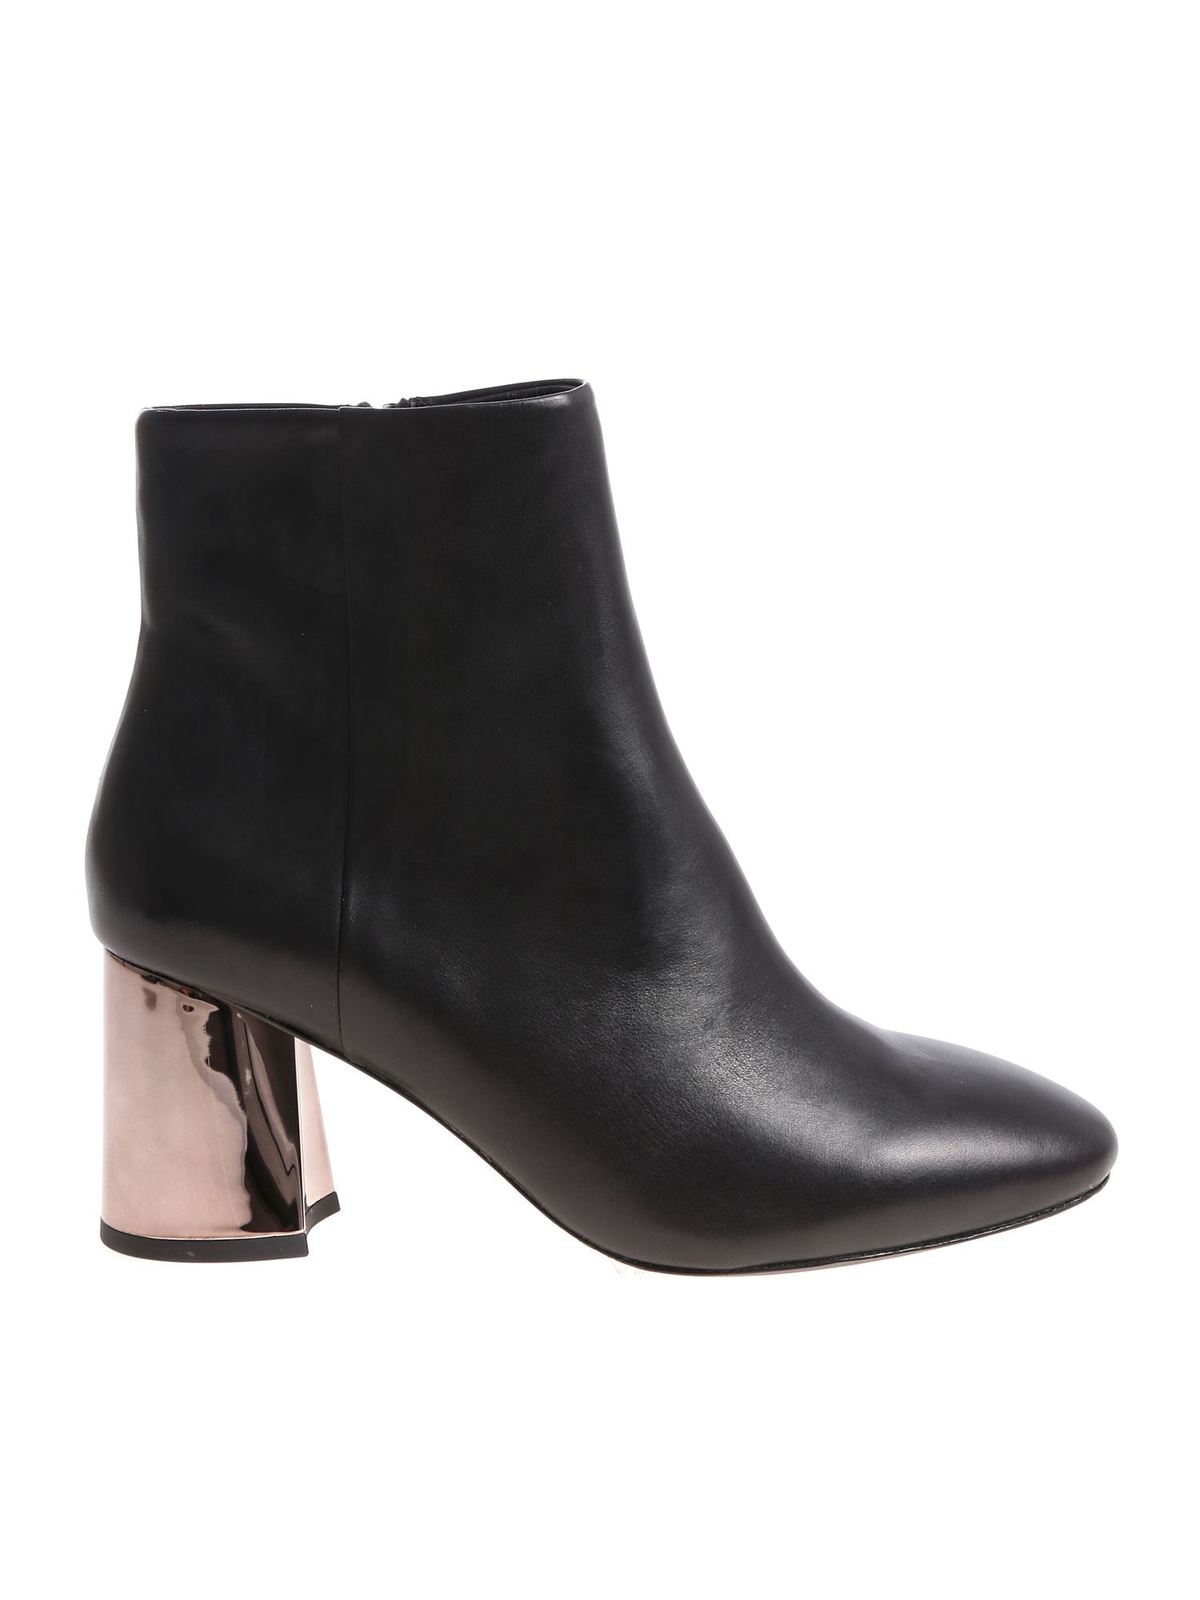 black booties with silver heel